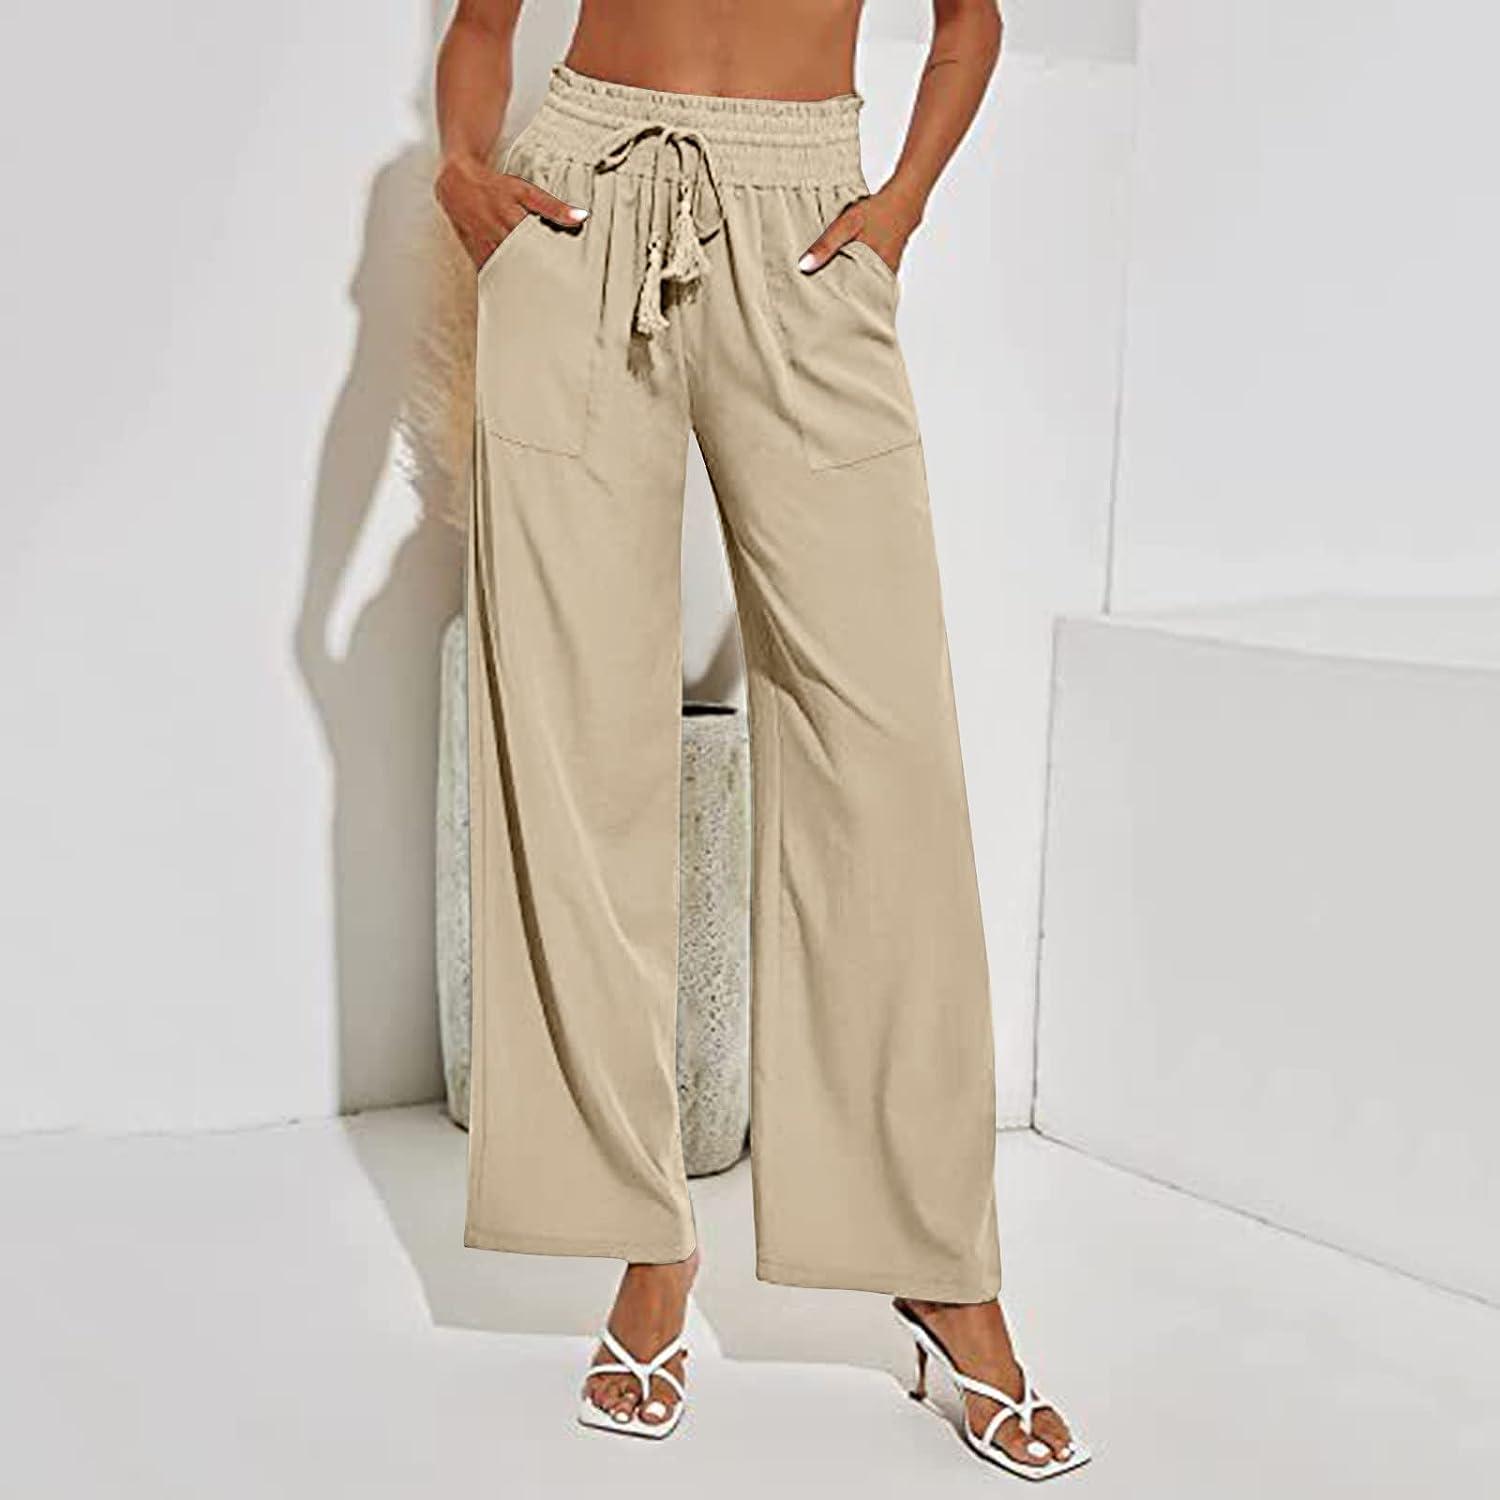 Buy Women's Wide Leg Pants, Elastic Waist Casual Cotton Linen Pants Summer  Pockets Harem Trousers Cropped Pants at